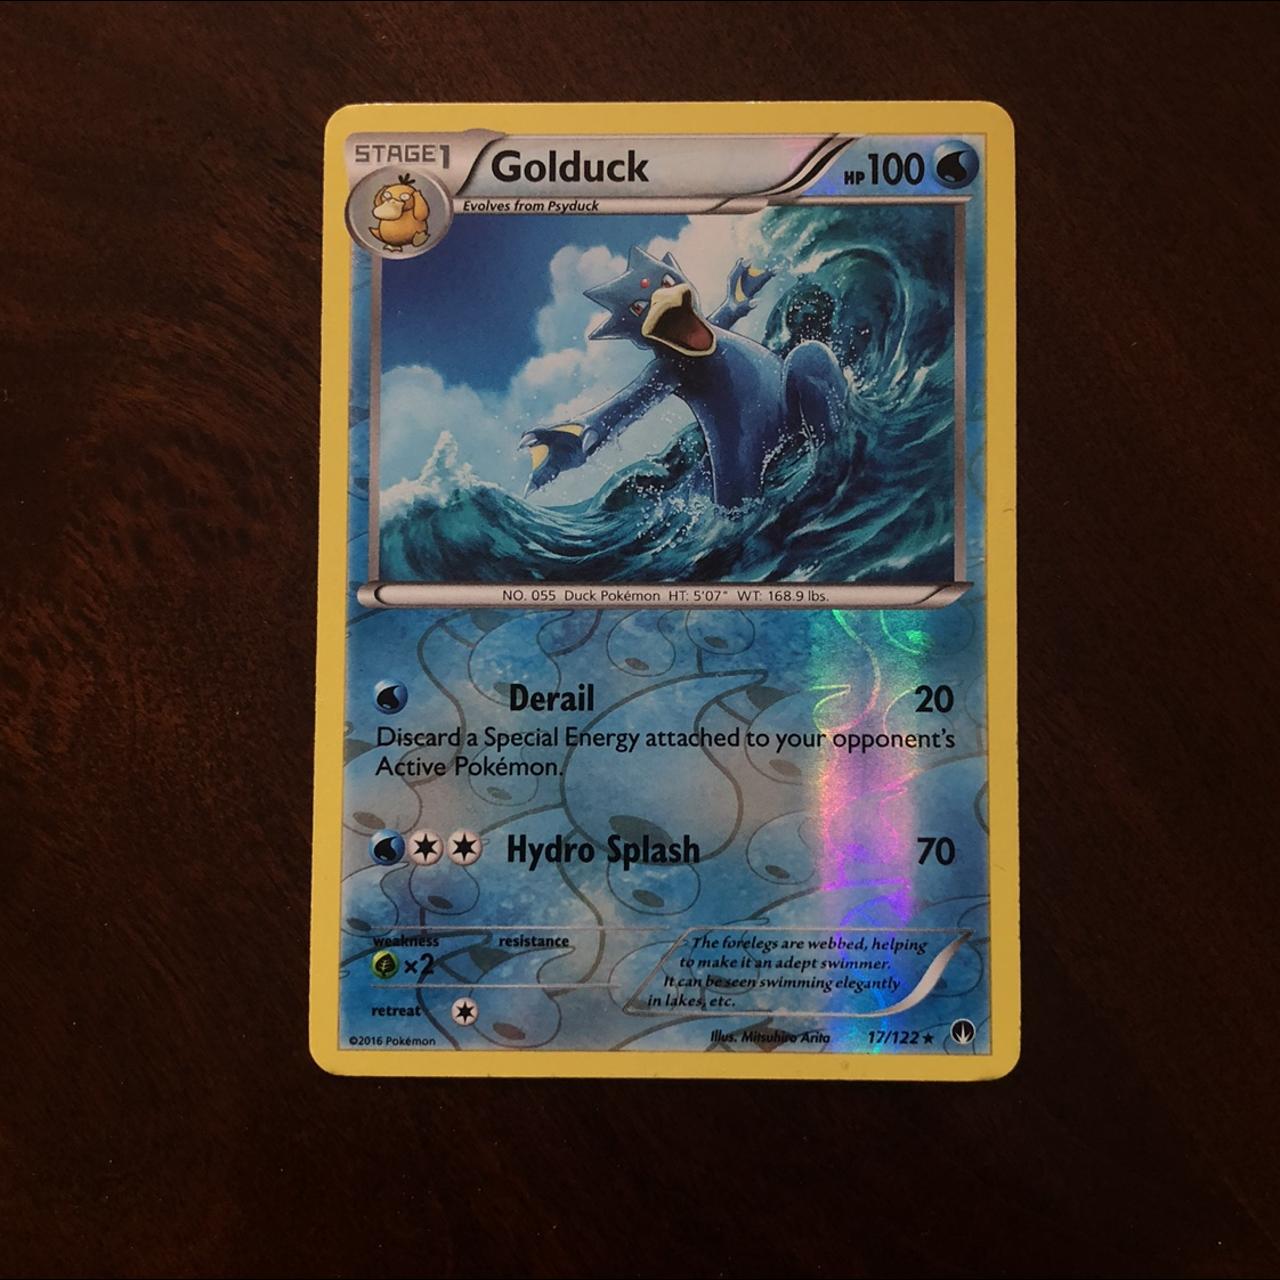 1 CARD 1 PROTECTOR Golduck 17/122 Rare Pokemon TCG Card 